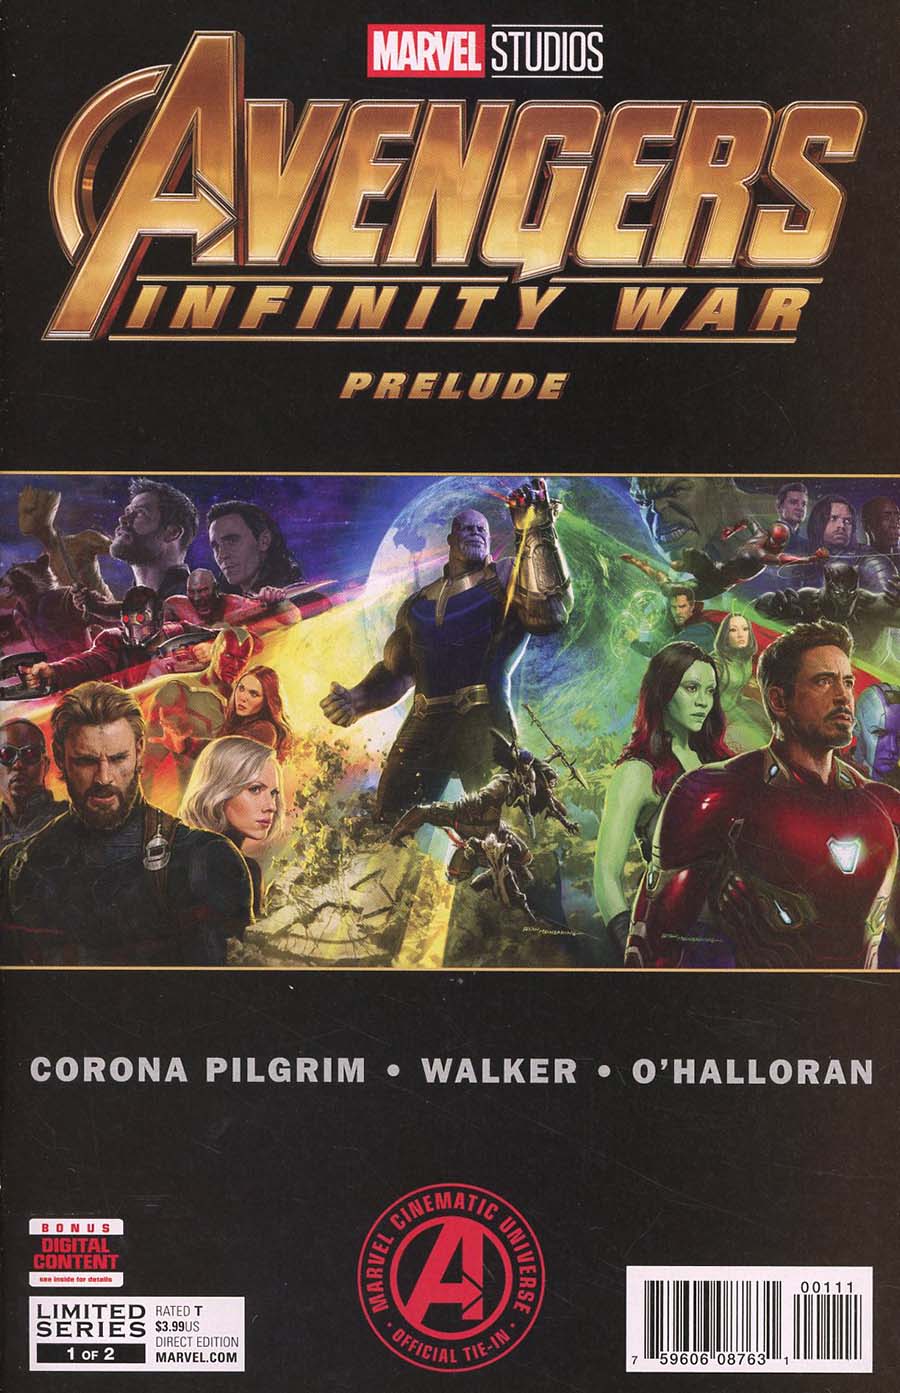 Marvels Avengers Infinity War Prelude #1